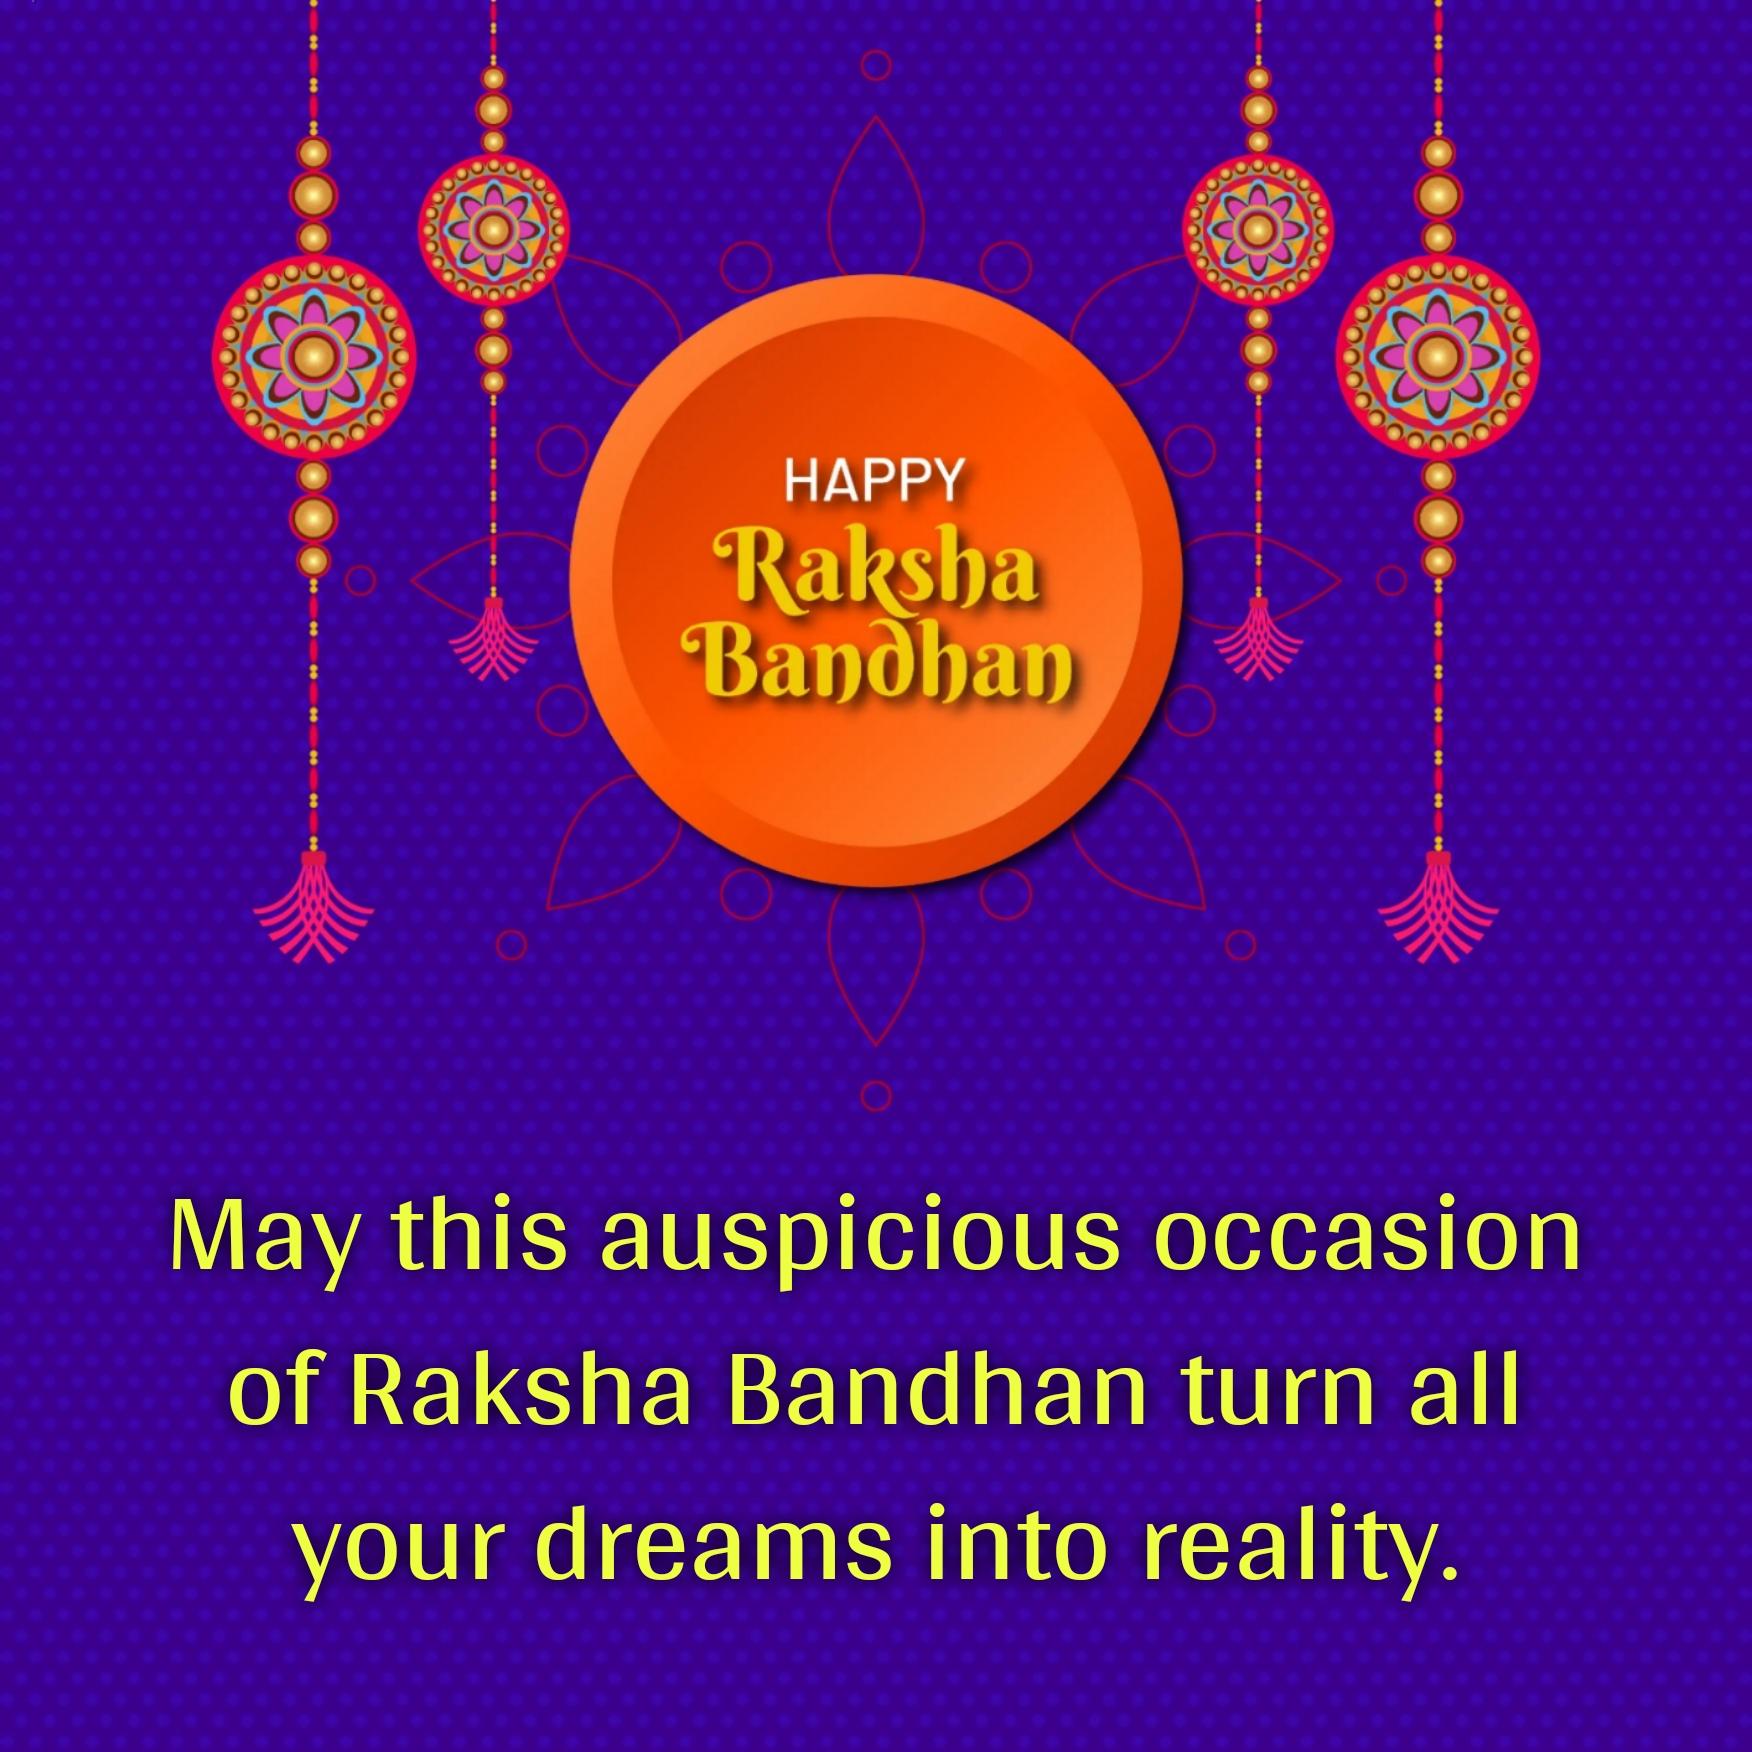 May this auspicious occasion of Raksha Bandhan turn all your dreams